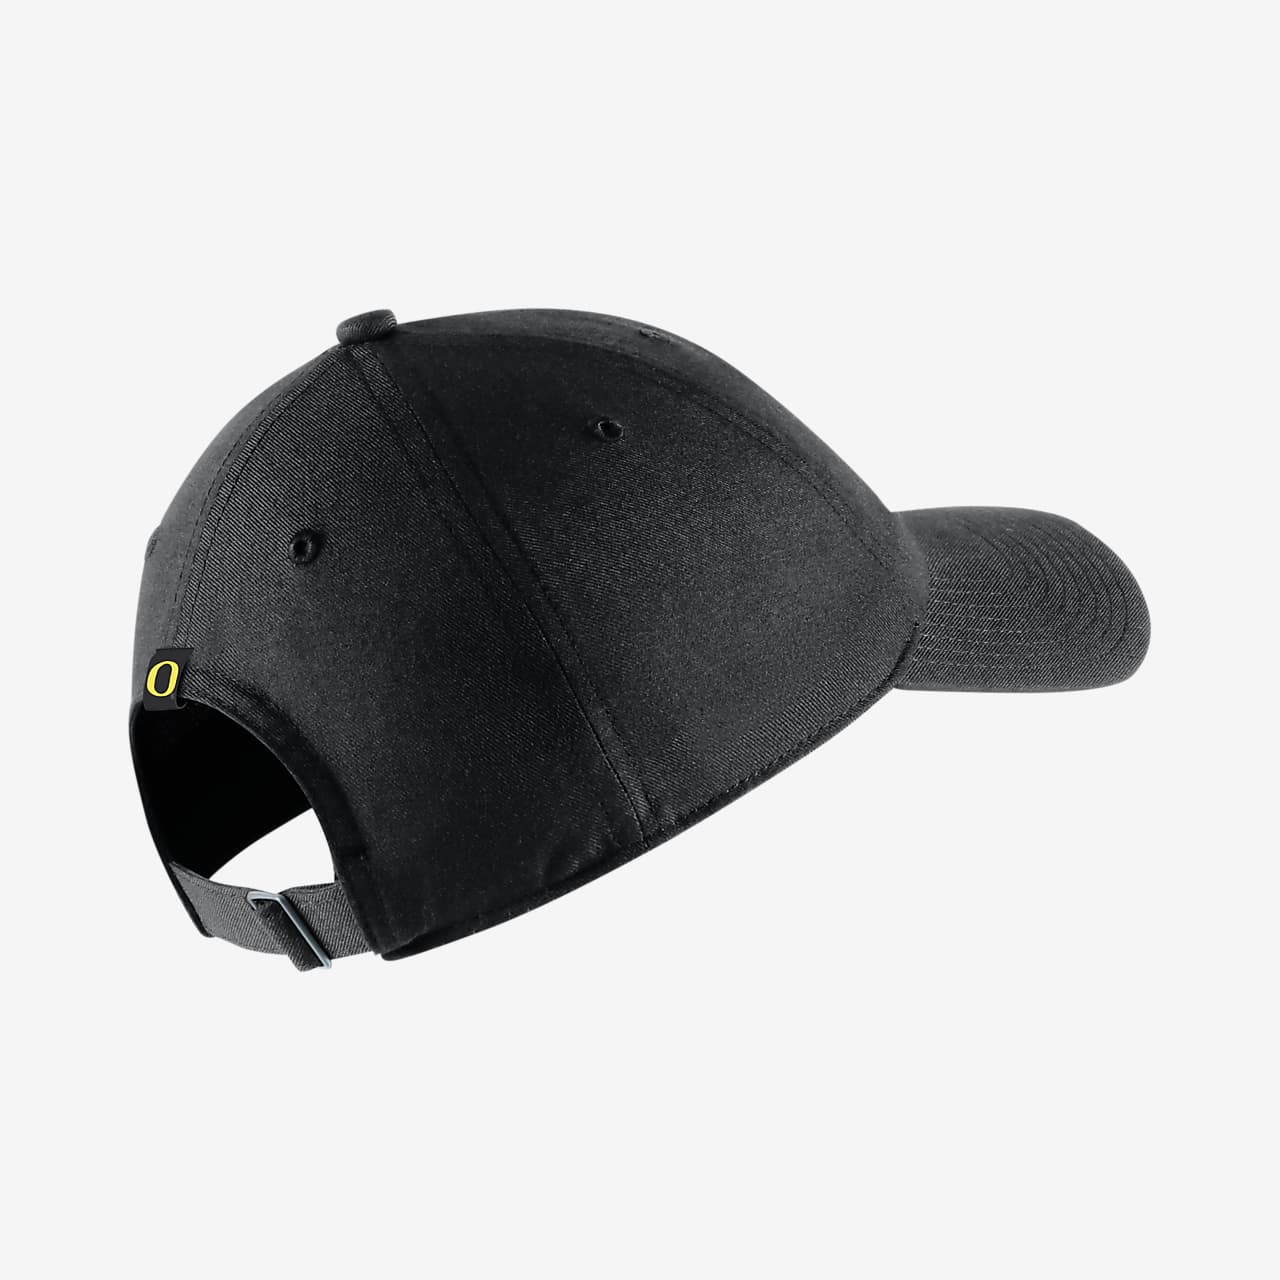 Nike College (Oregon) Adjustable Swoosh Hat.